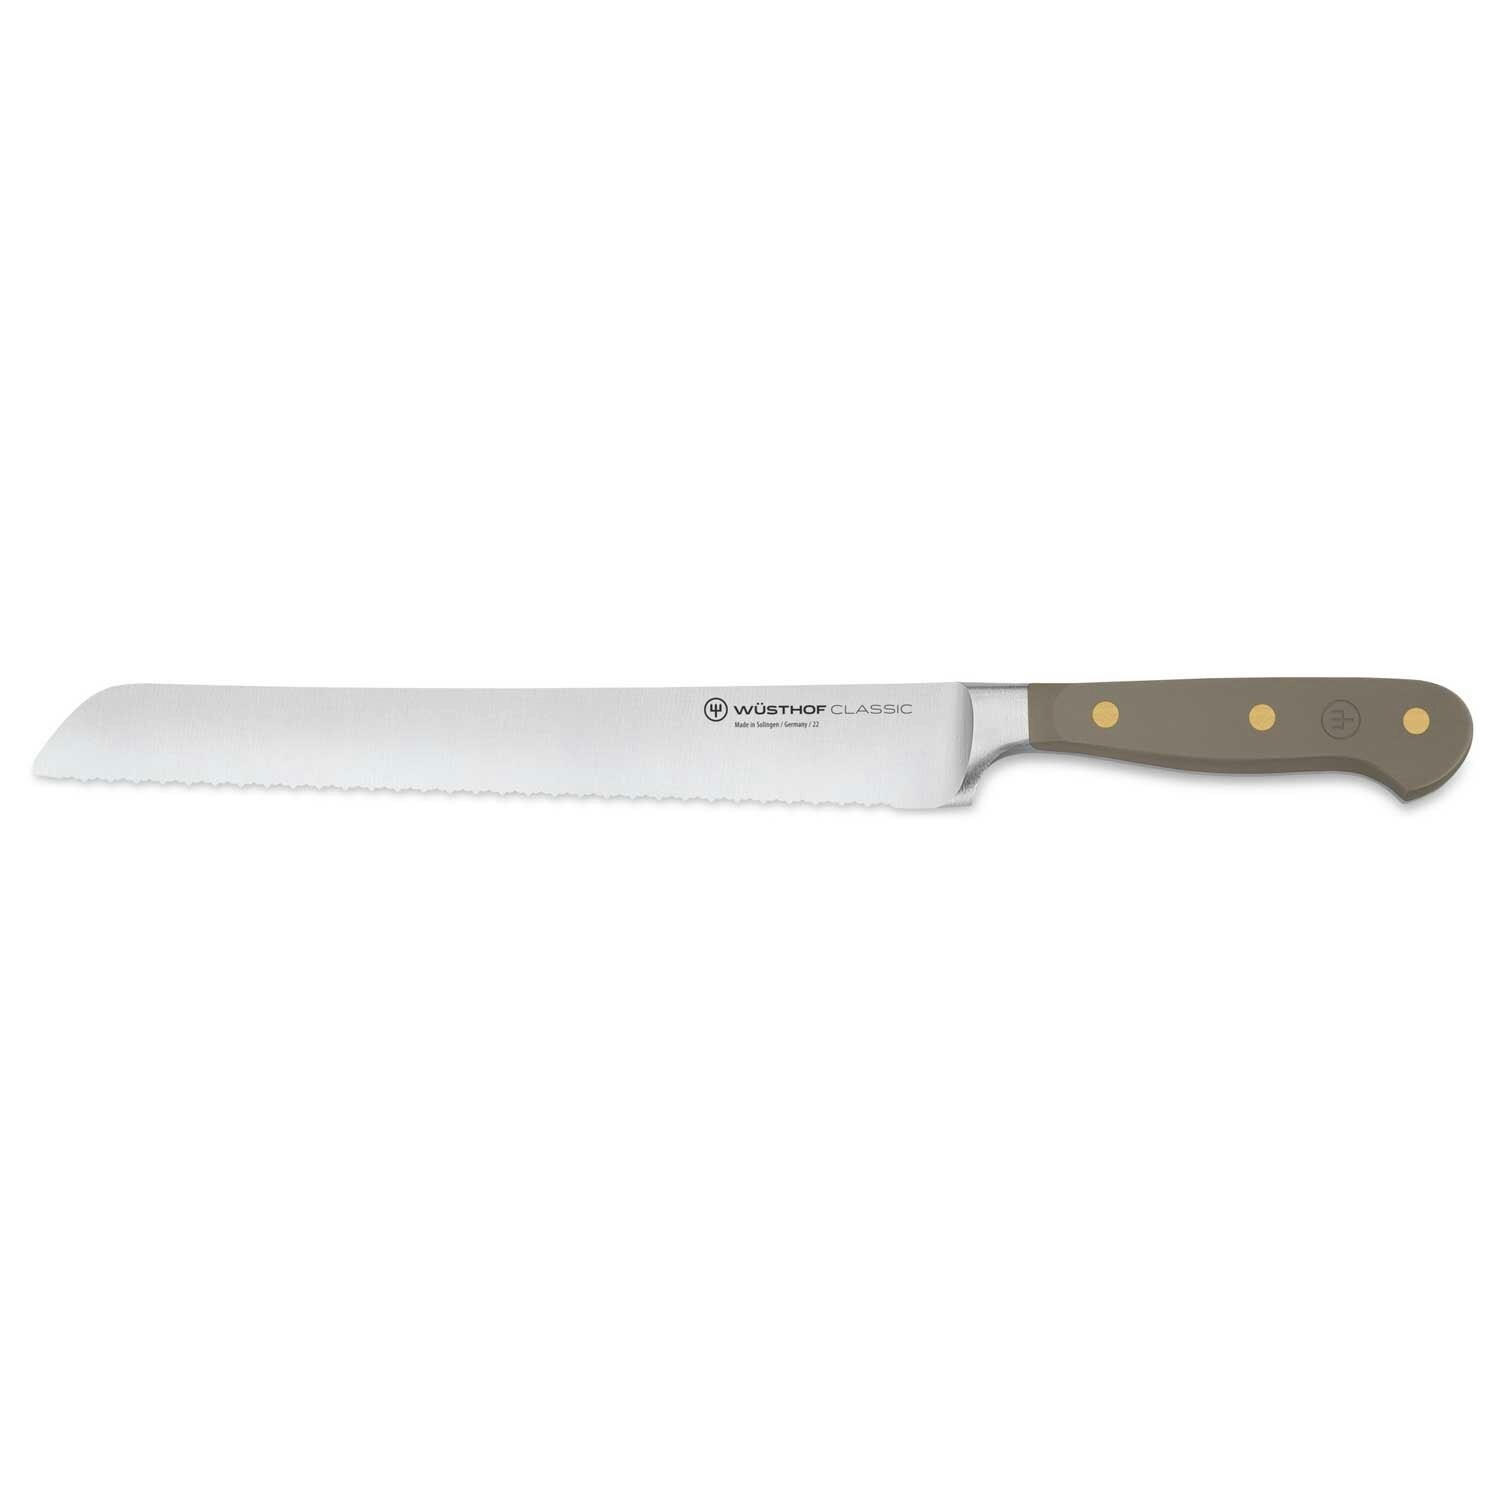 https://royaldesign.com/image/2/wusthof-classic-colour-bread-knife-23-cm-1